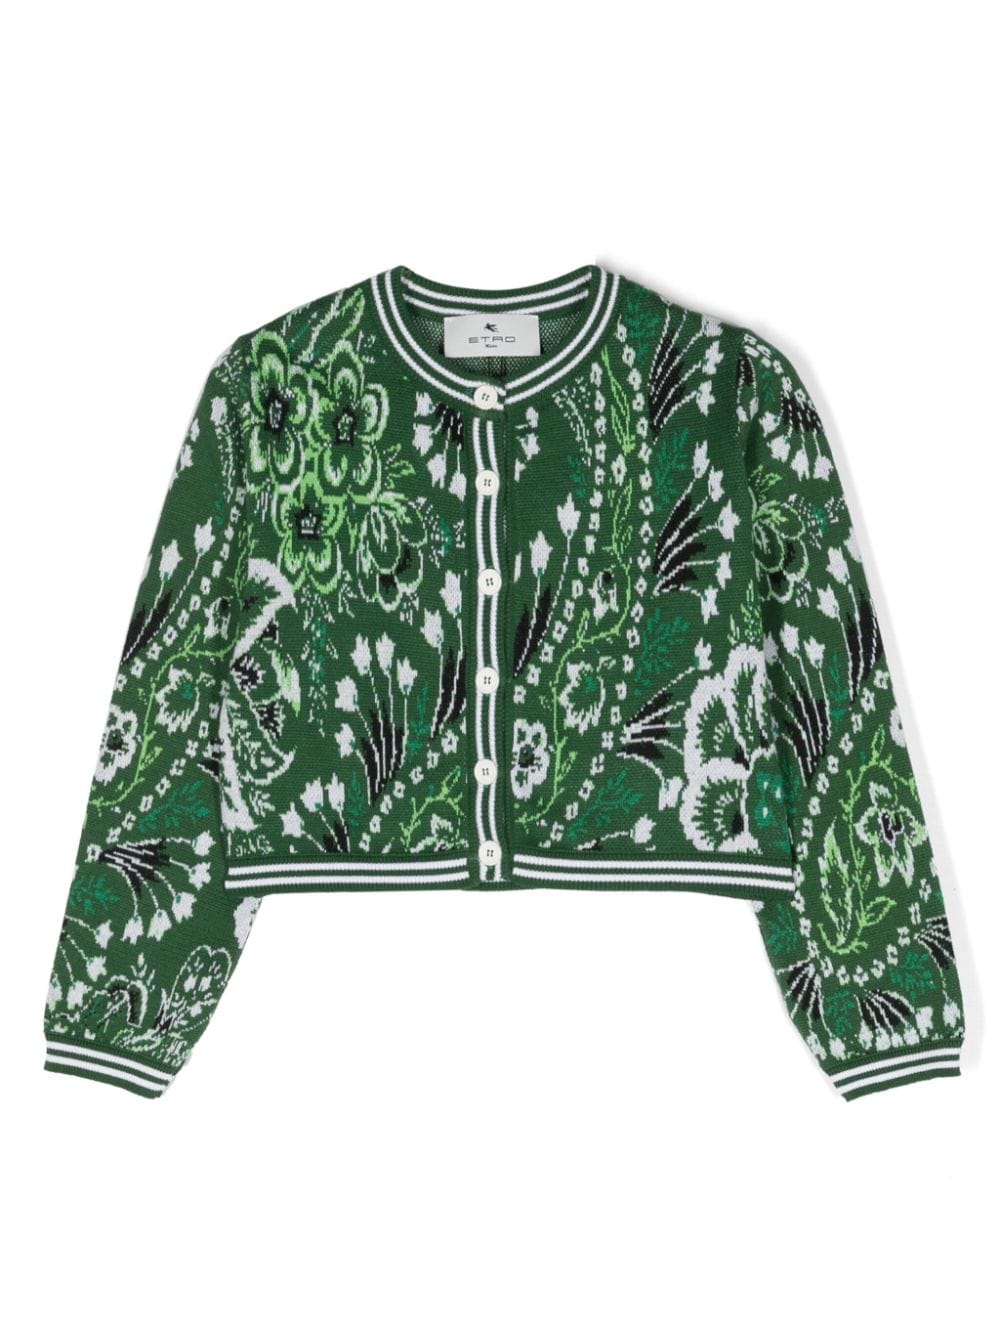 ETRO KIDS jacquard floral-motif cardigan - Verde